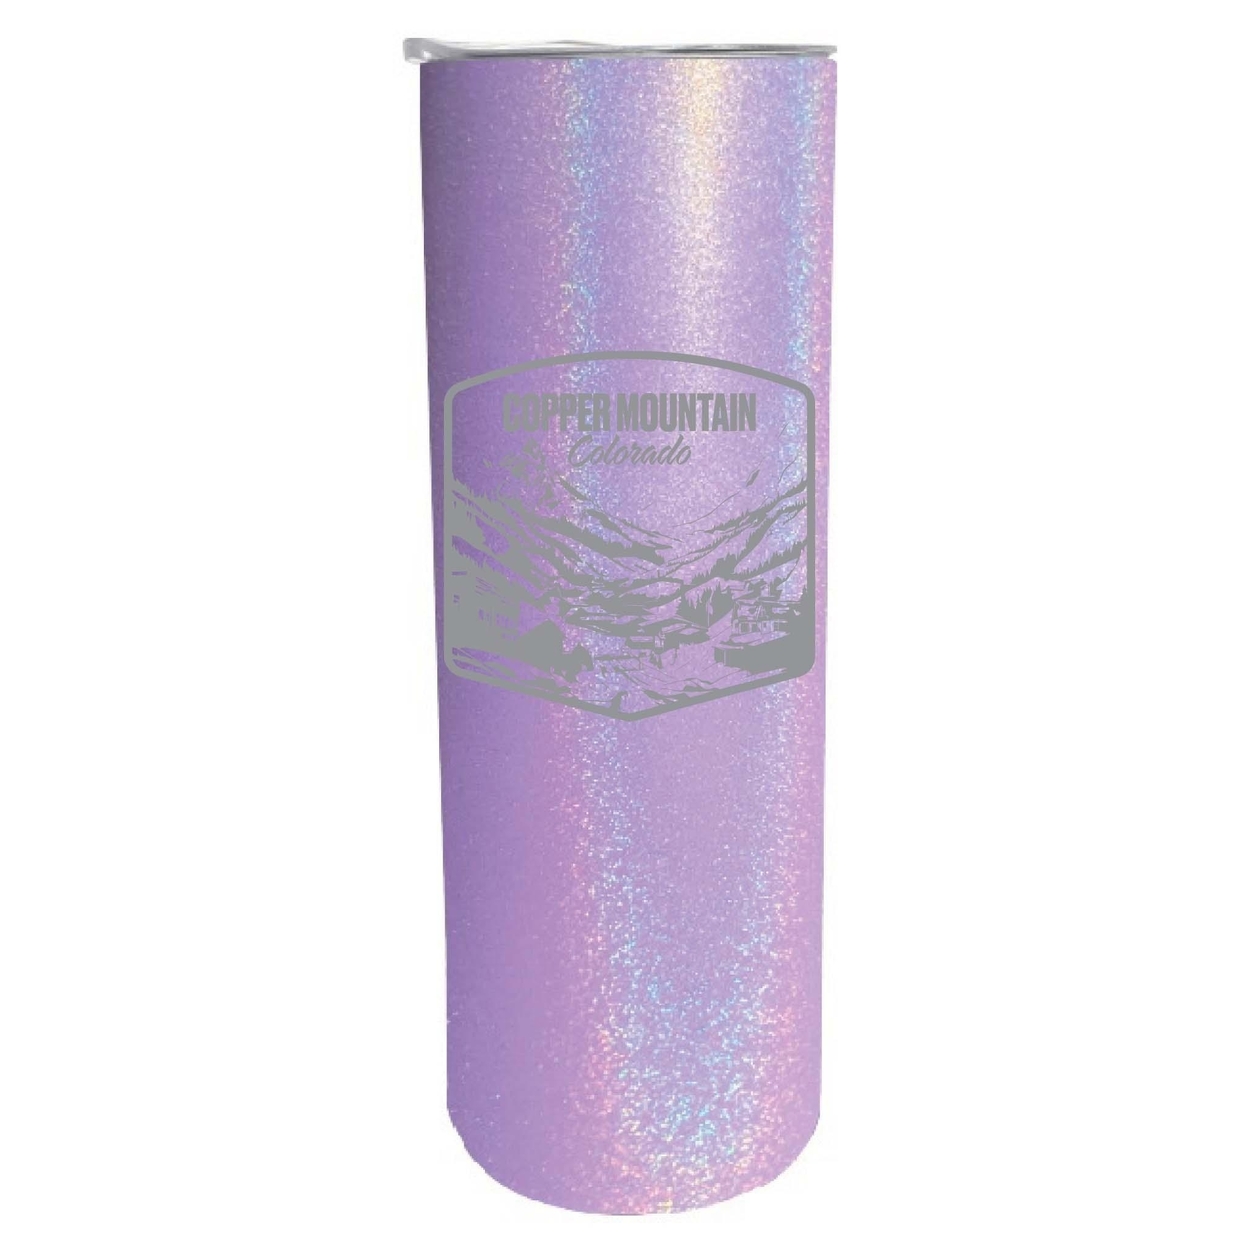 Copper Mountain Souvenir 20 Oz Engraved Insulated Skinny Tumbler - Purple Glitter,,2-Pack